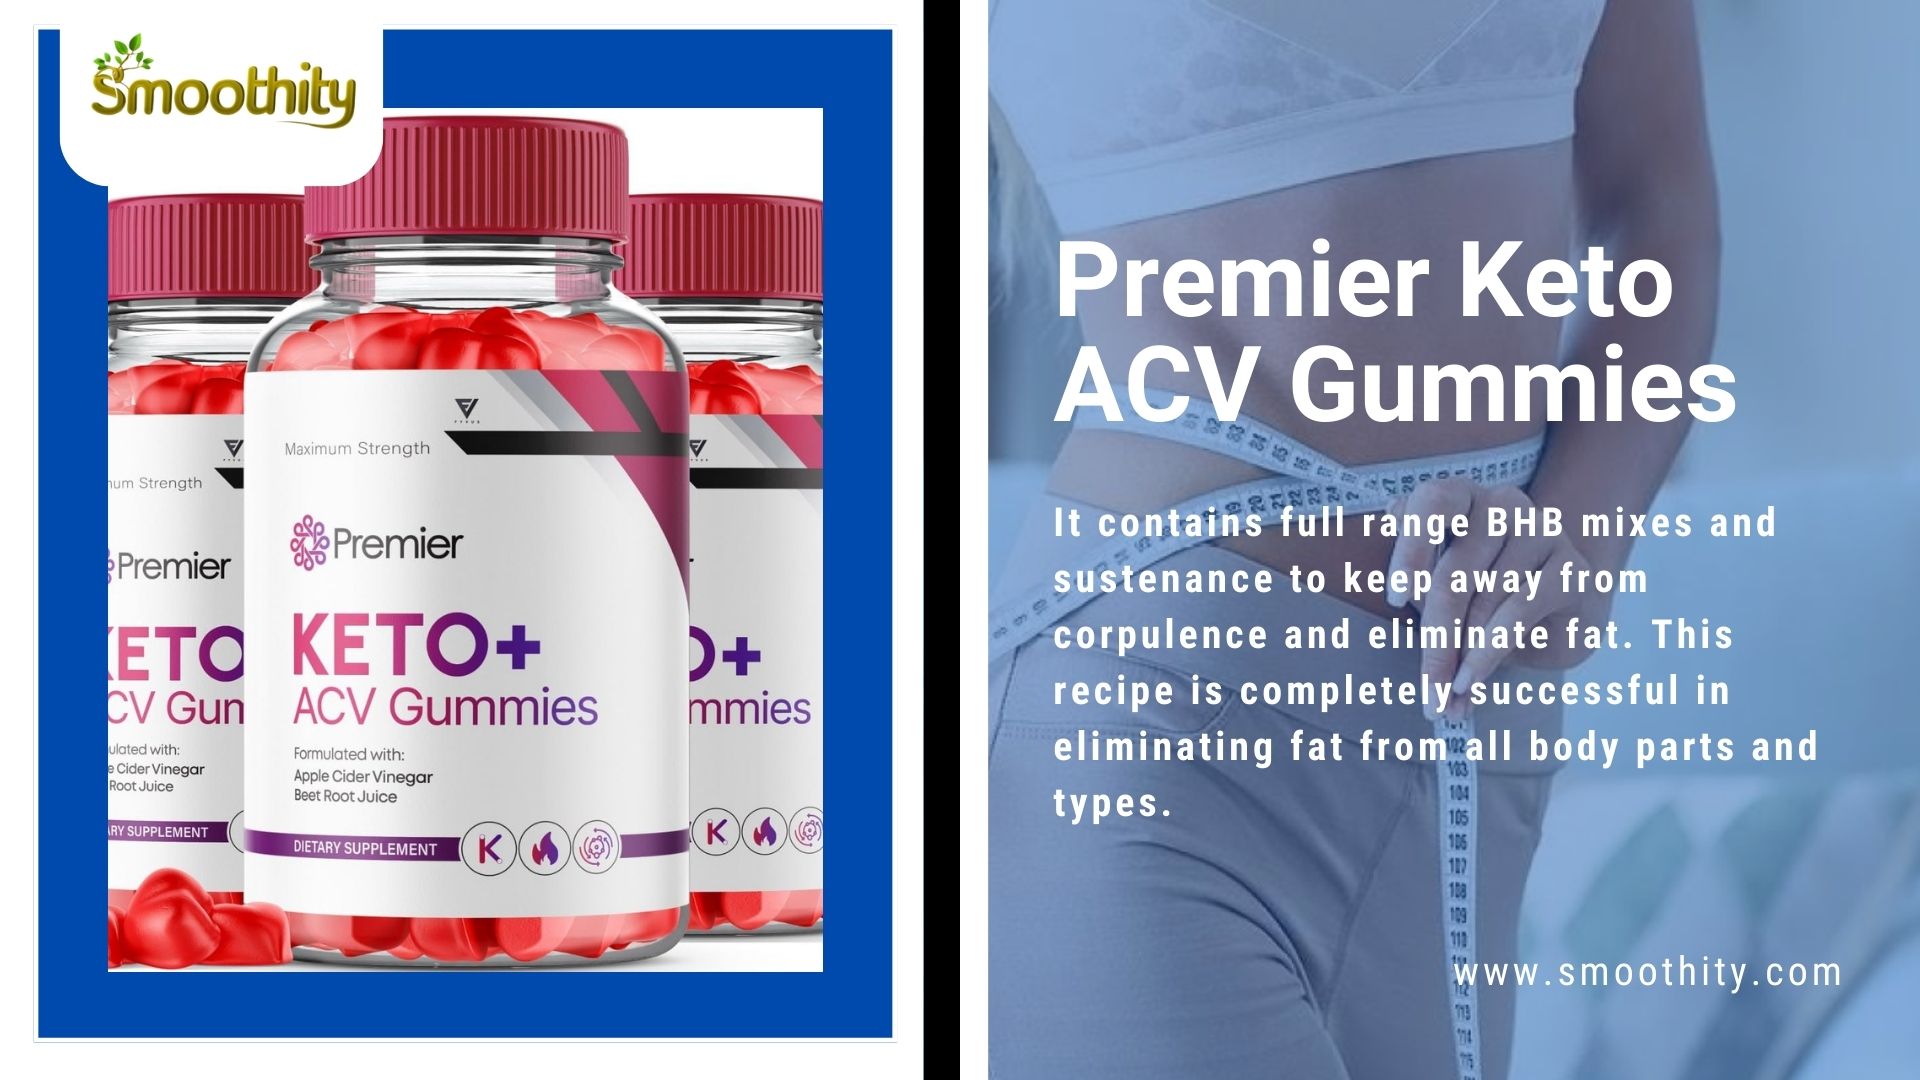 Premier Keto ACV Gummies Reviews